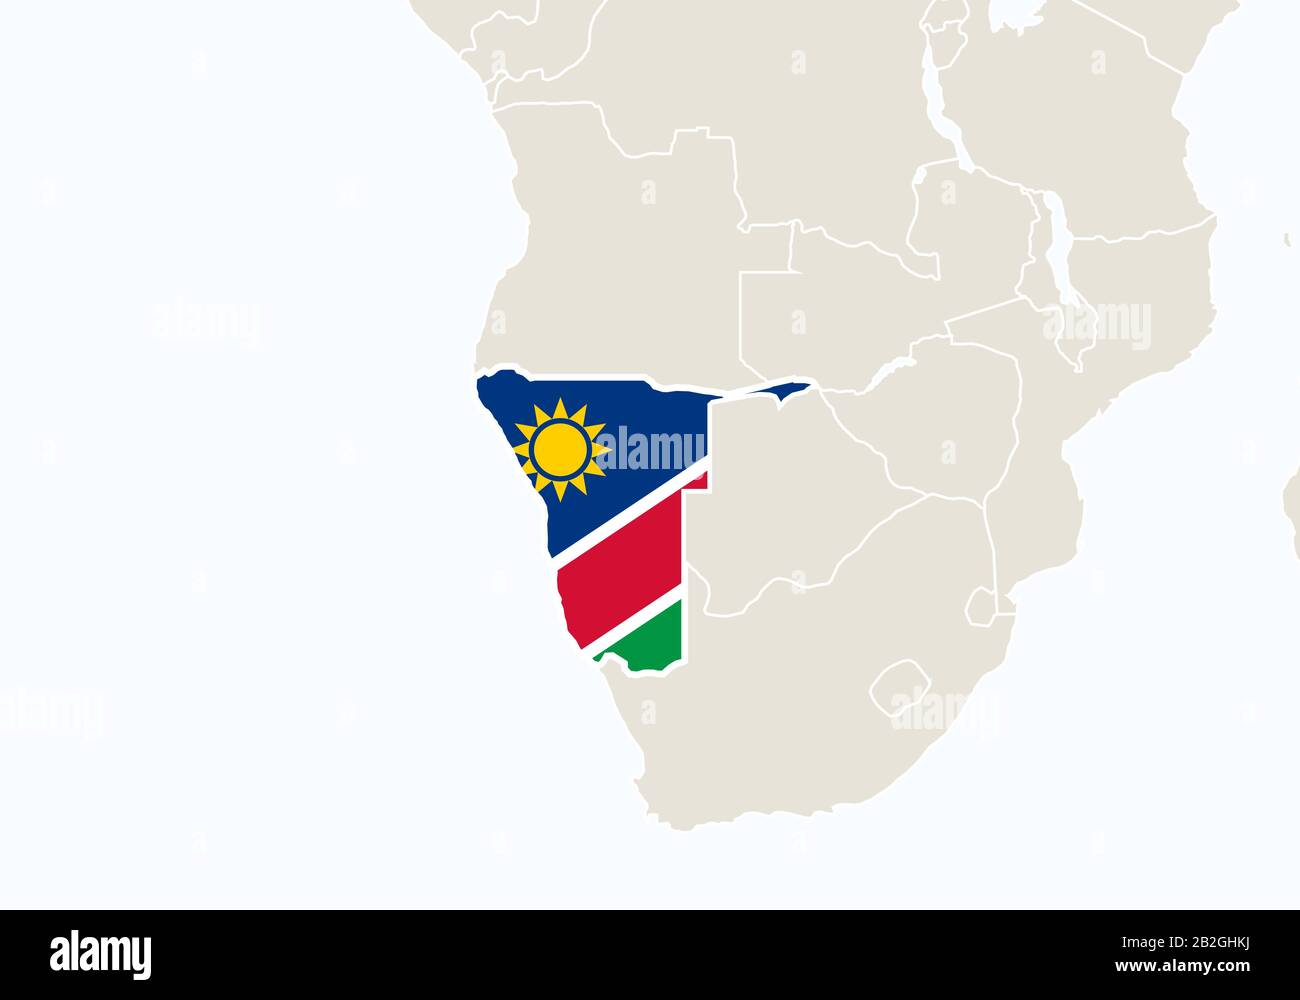 Afrika mit hervorgehobener Karte von Namibia. Vektorgrafiken. Stock Vektor